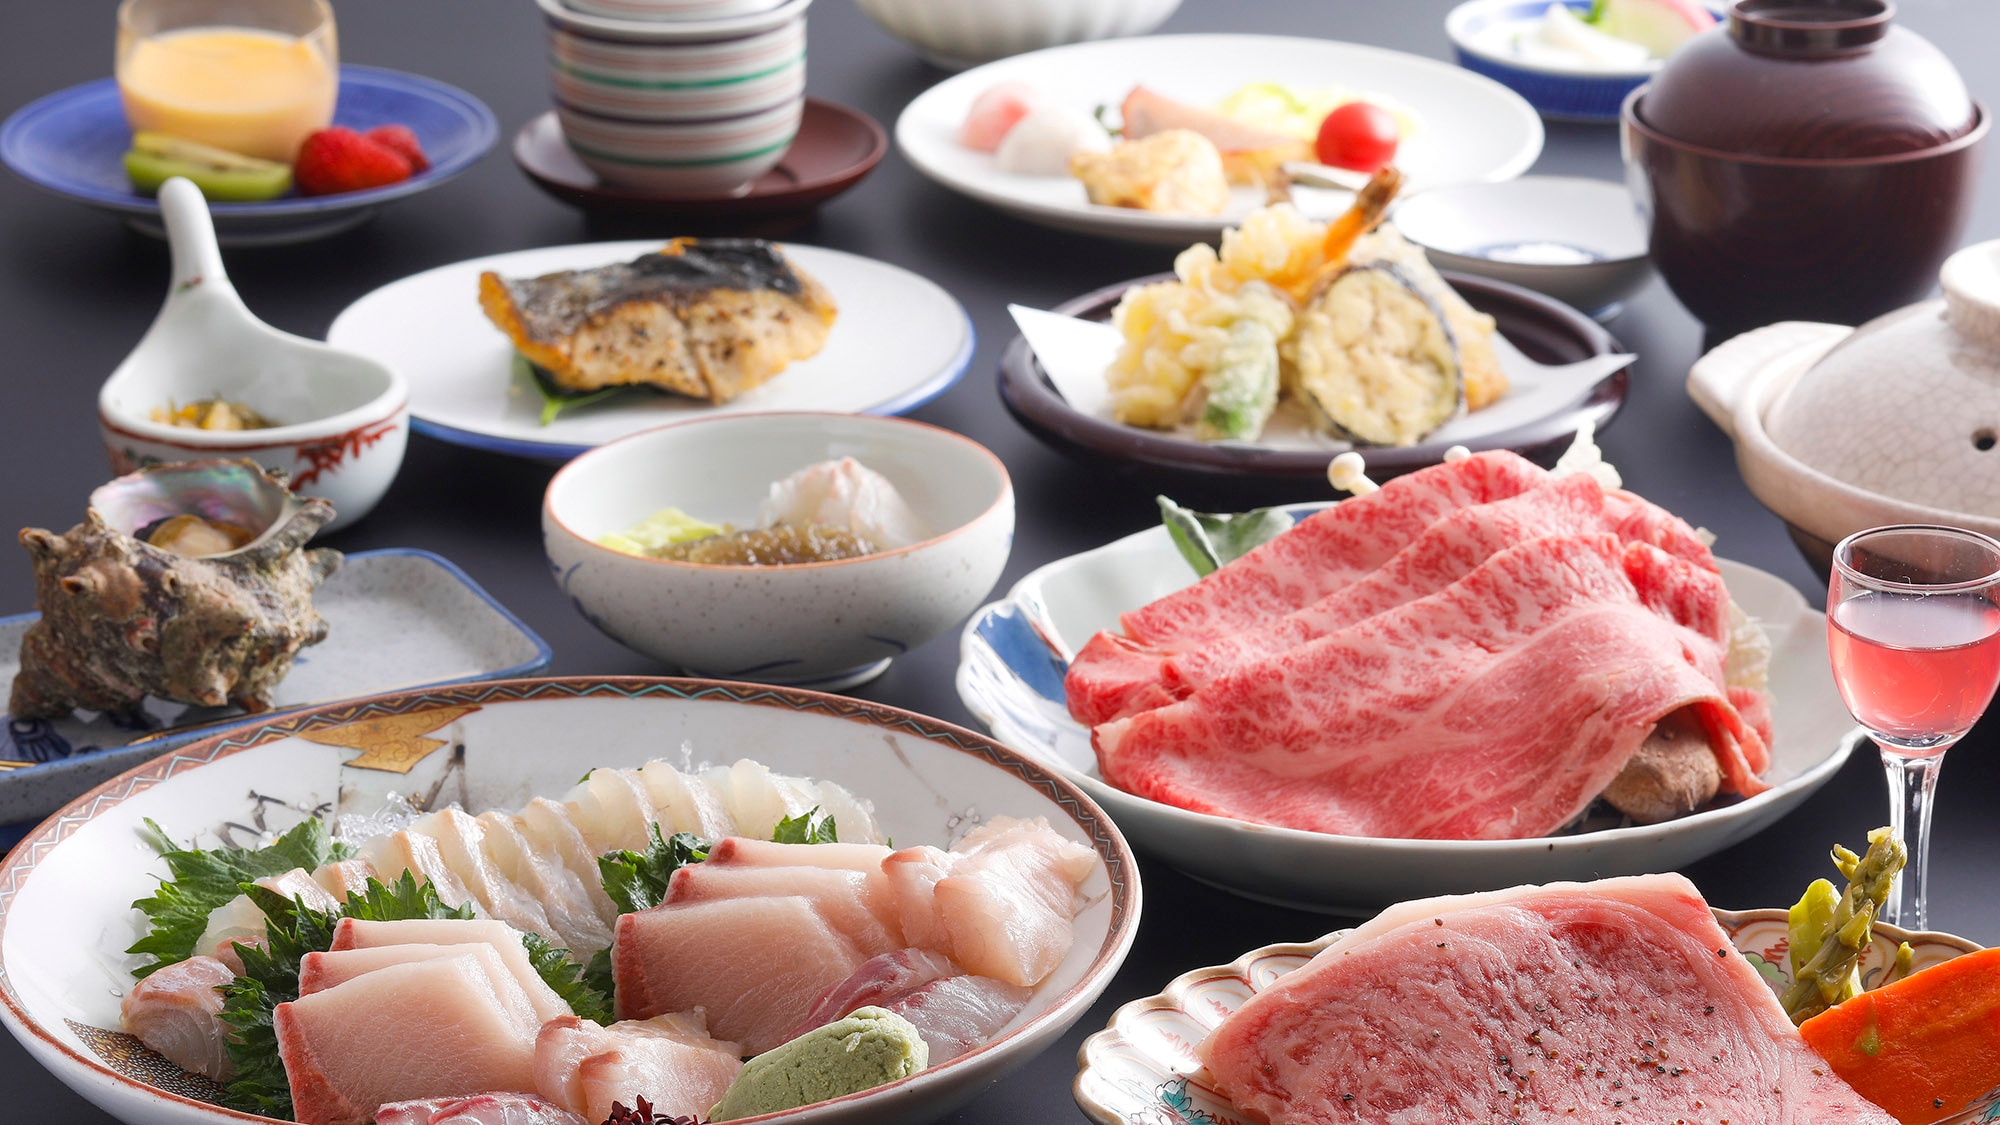 ・ [Tamba beef kaiseki dinner example (image)] Kaiseki cuisine with plenty of fresh seafood from the Sea of Japan